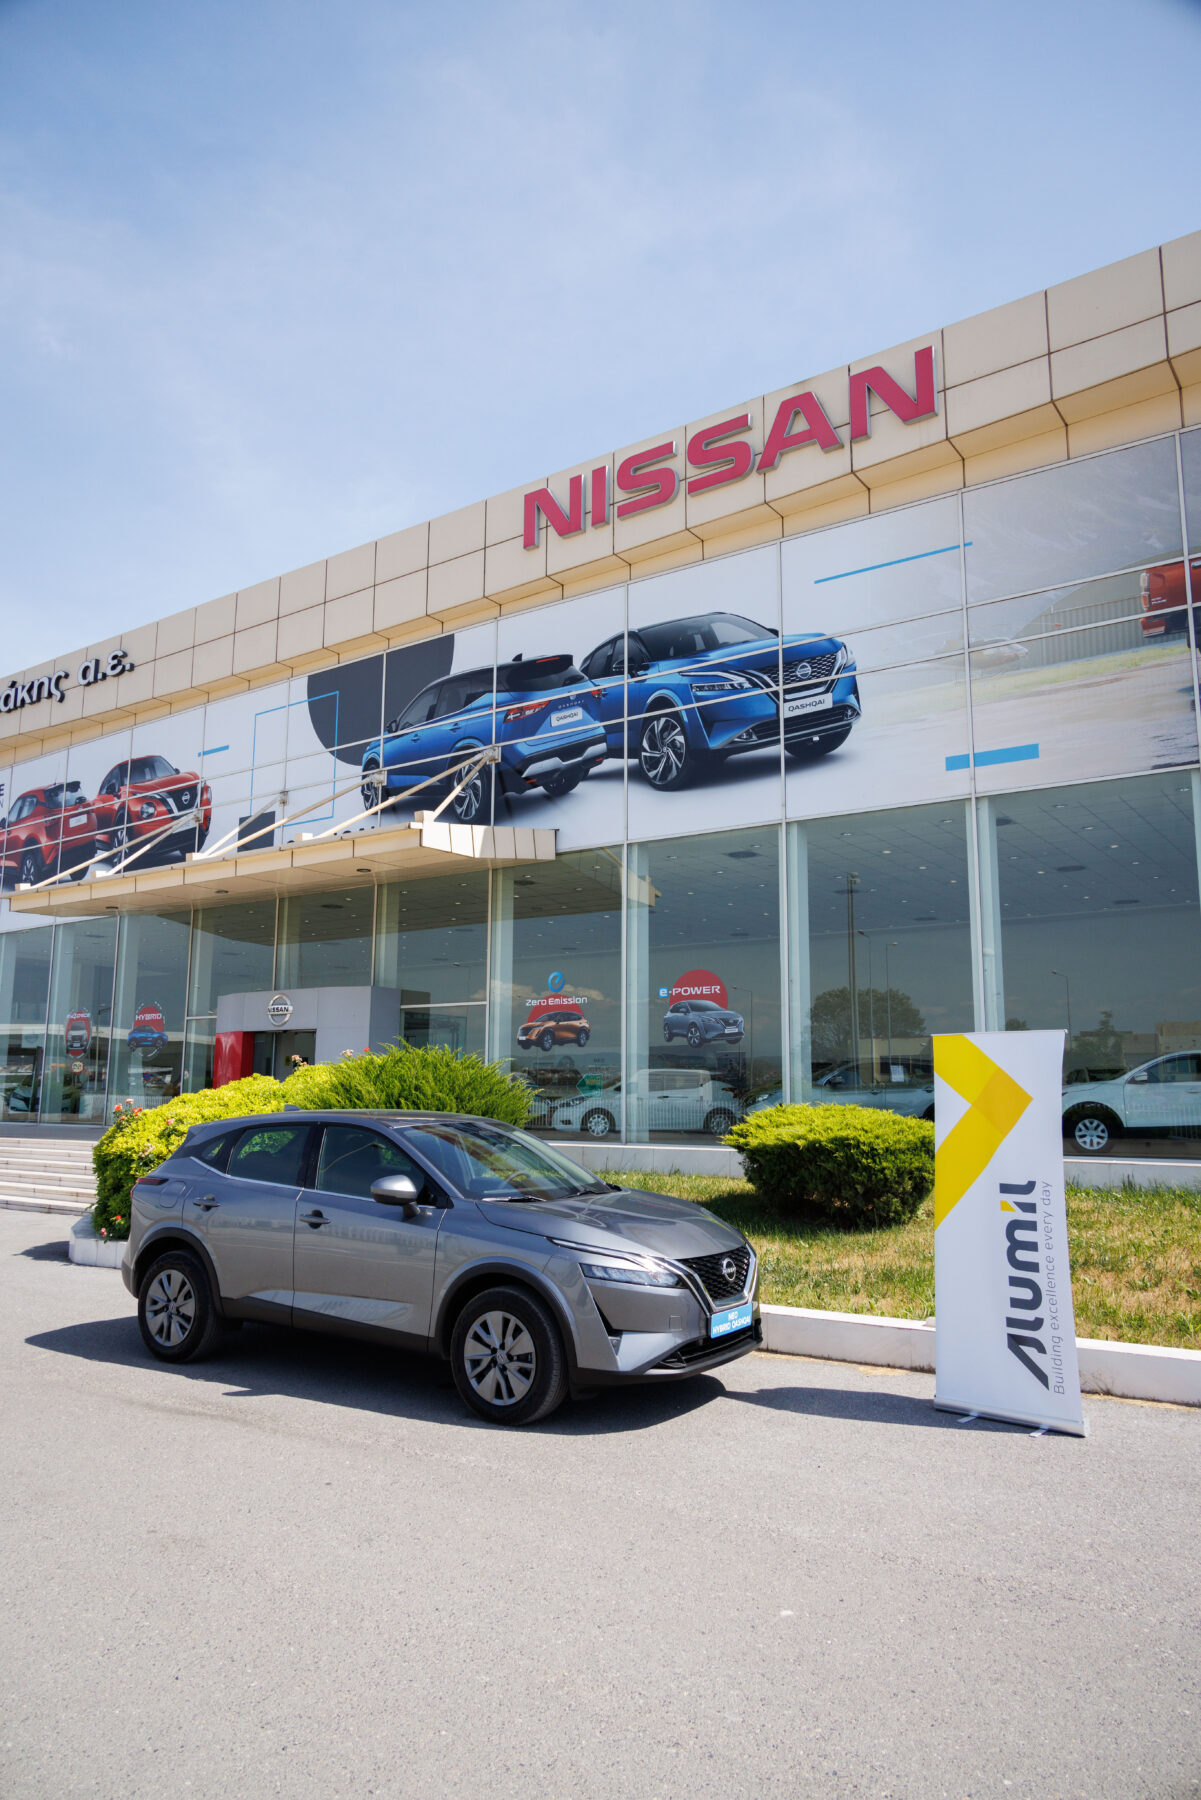 Archisearch Έρχεται η κλήρωση ALUMILIA στις 3/7: Ένα Nissan Qashqai Hybrid περιμένει τον τυχερό συνεργάτη της ALUMIL!